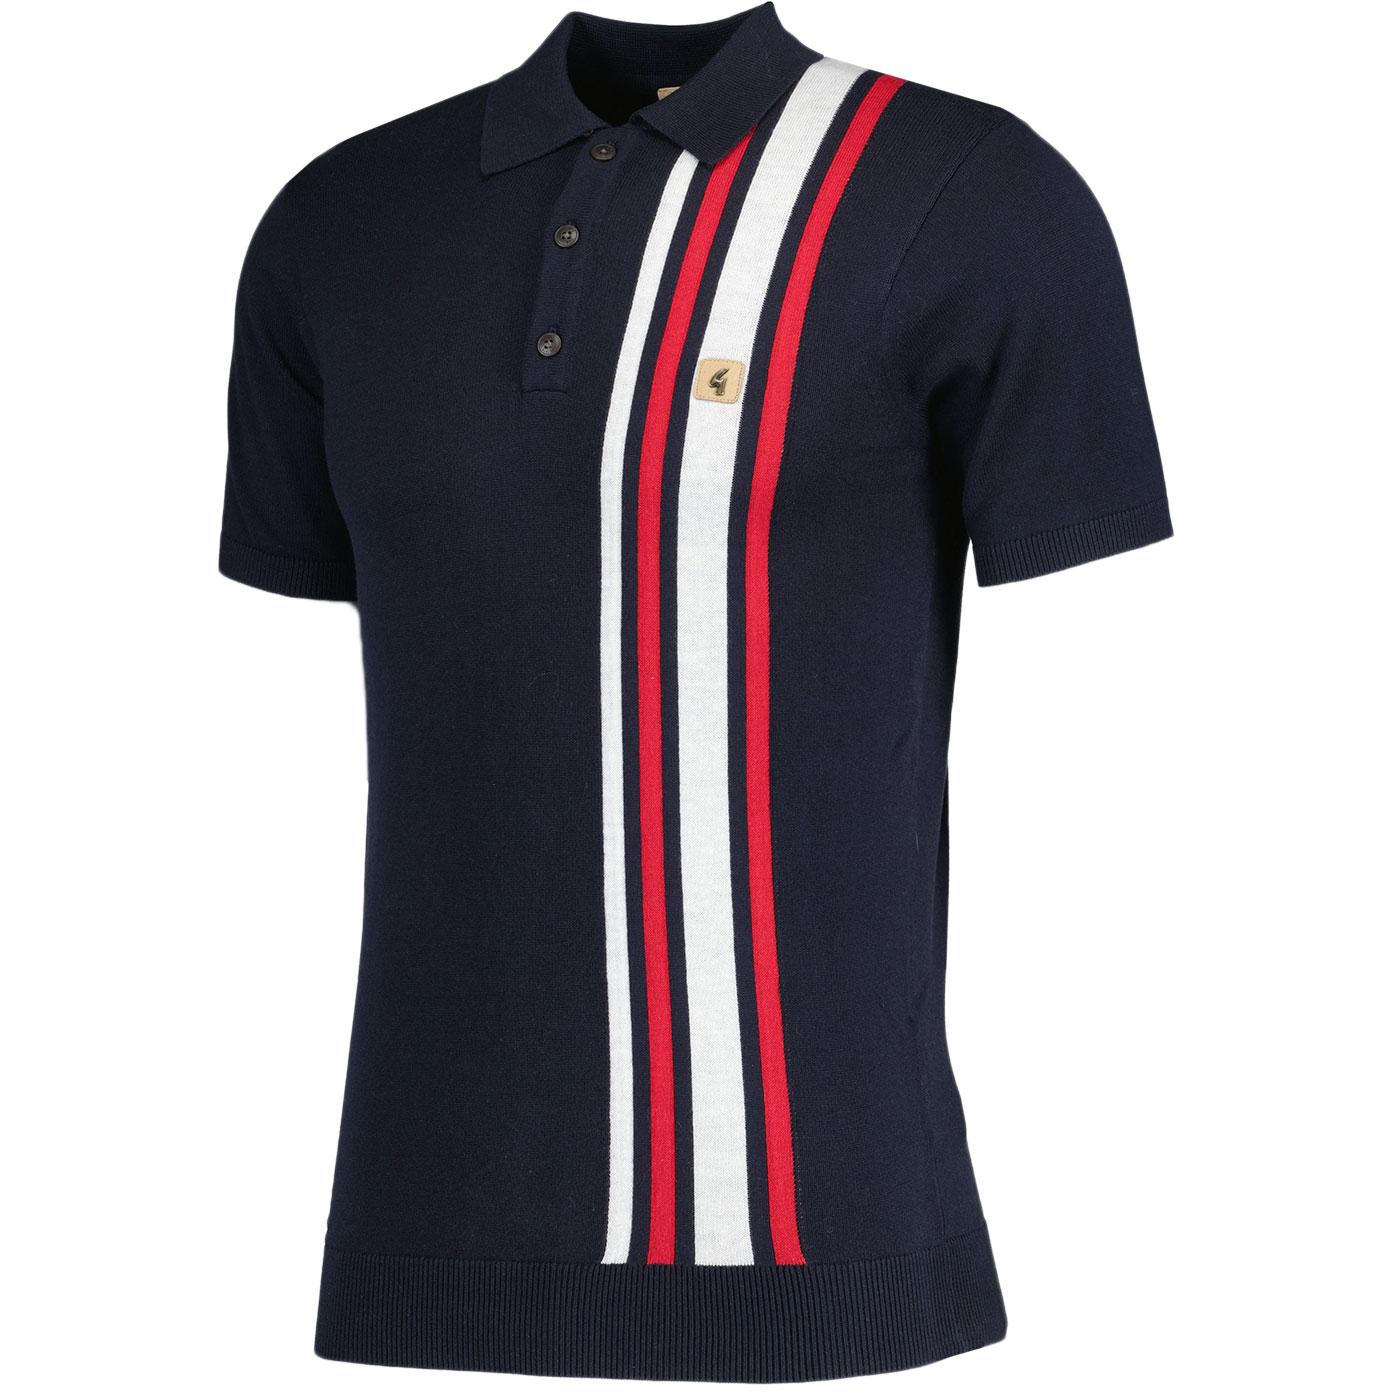 Gabicci Soda Retro Racing Stripe Knitted Polo Shirt in Navy